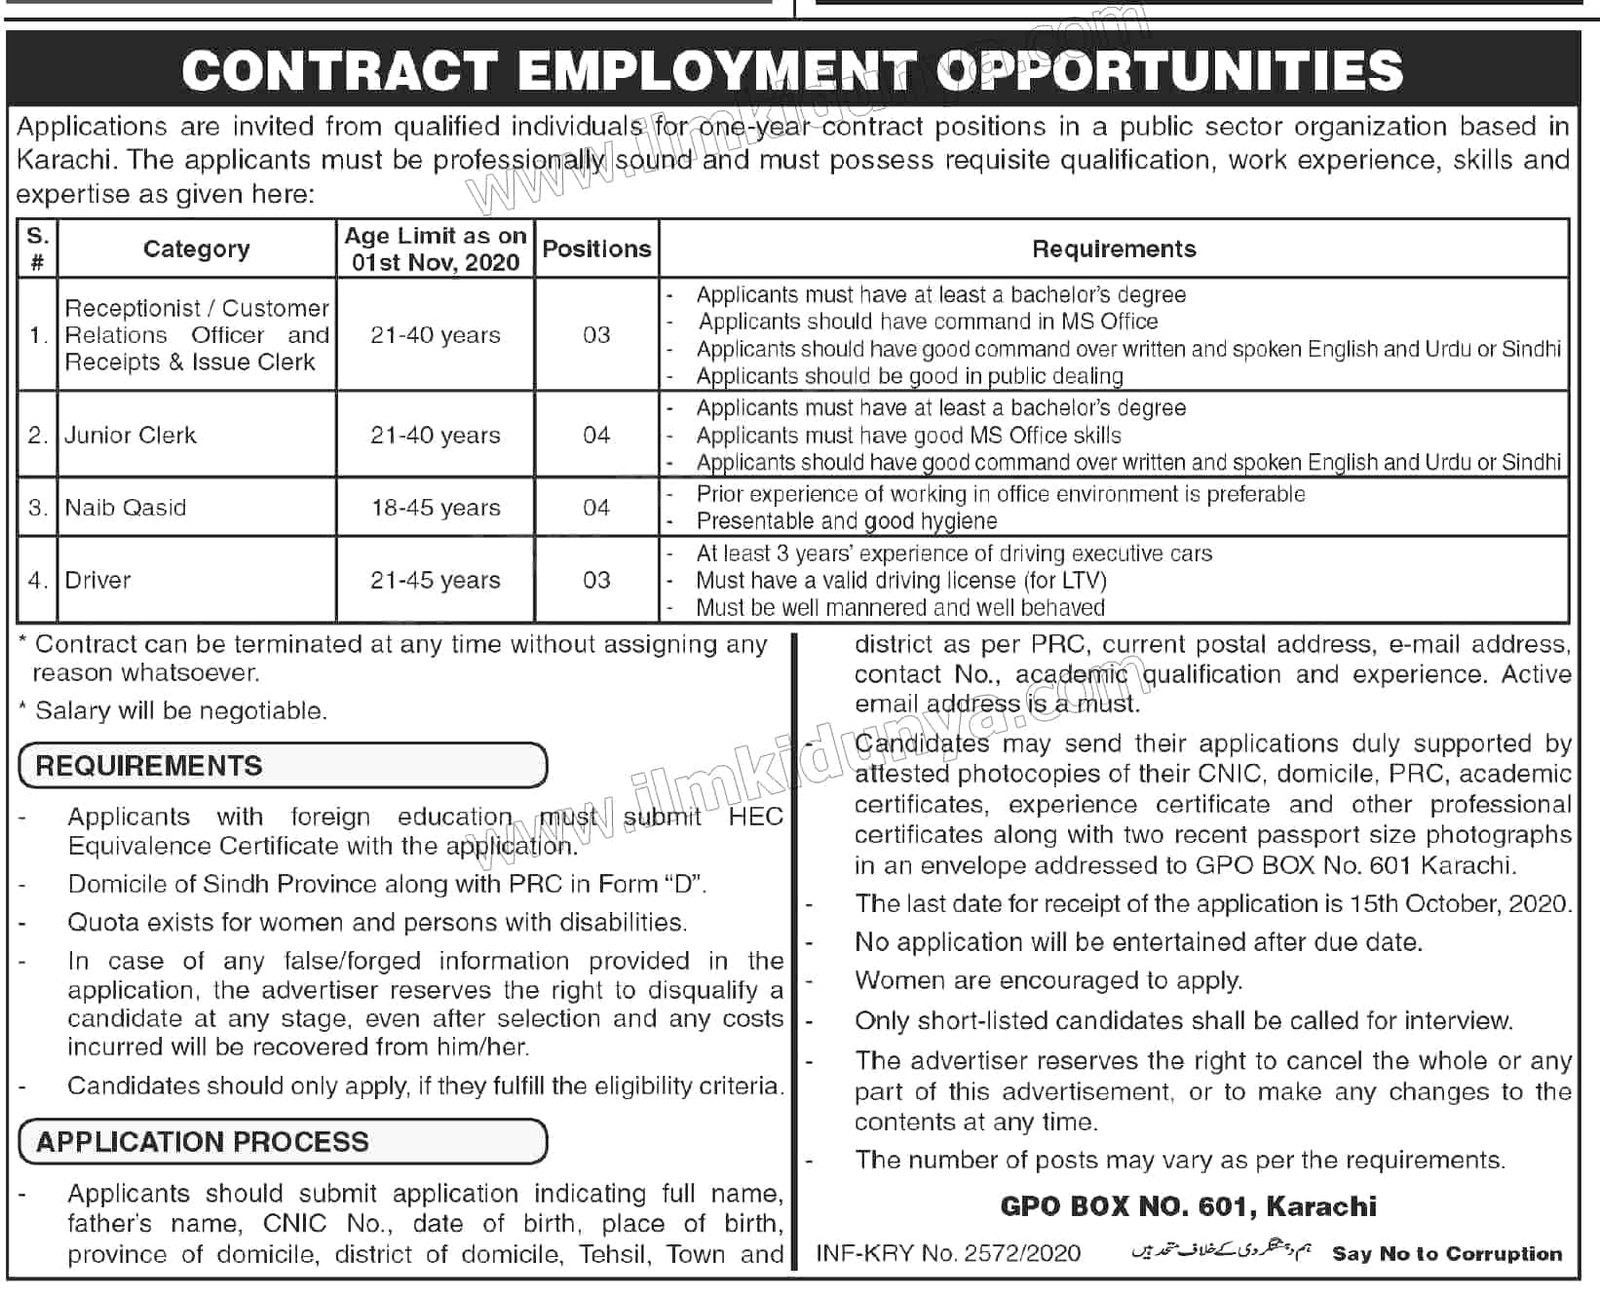 Jobs in Public Sector Organization Po Box No 601 Karachi 2020